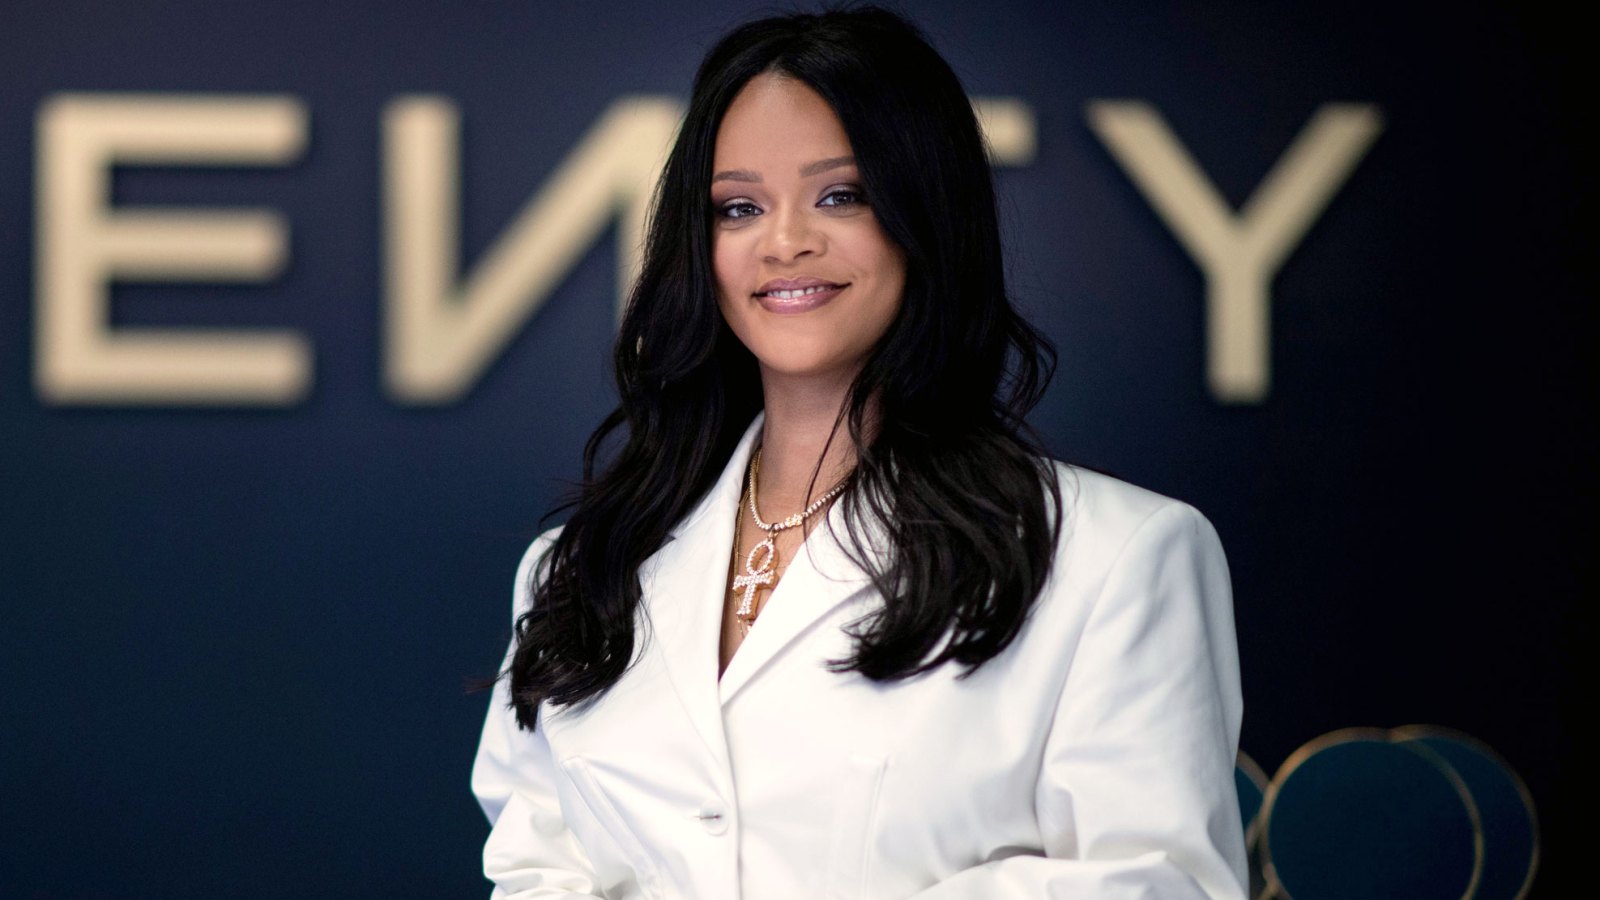 Rihanna Tops List as the Richest Female Musician